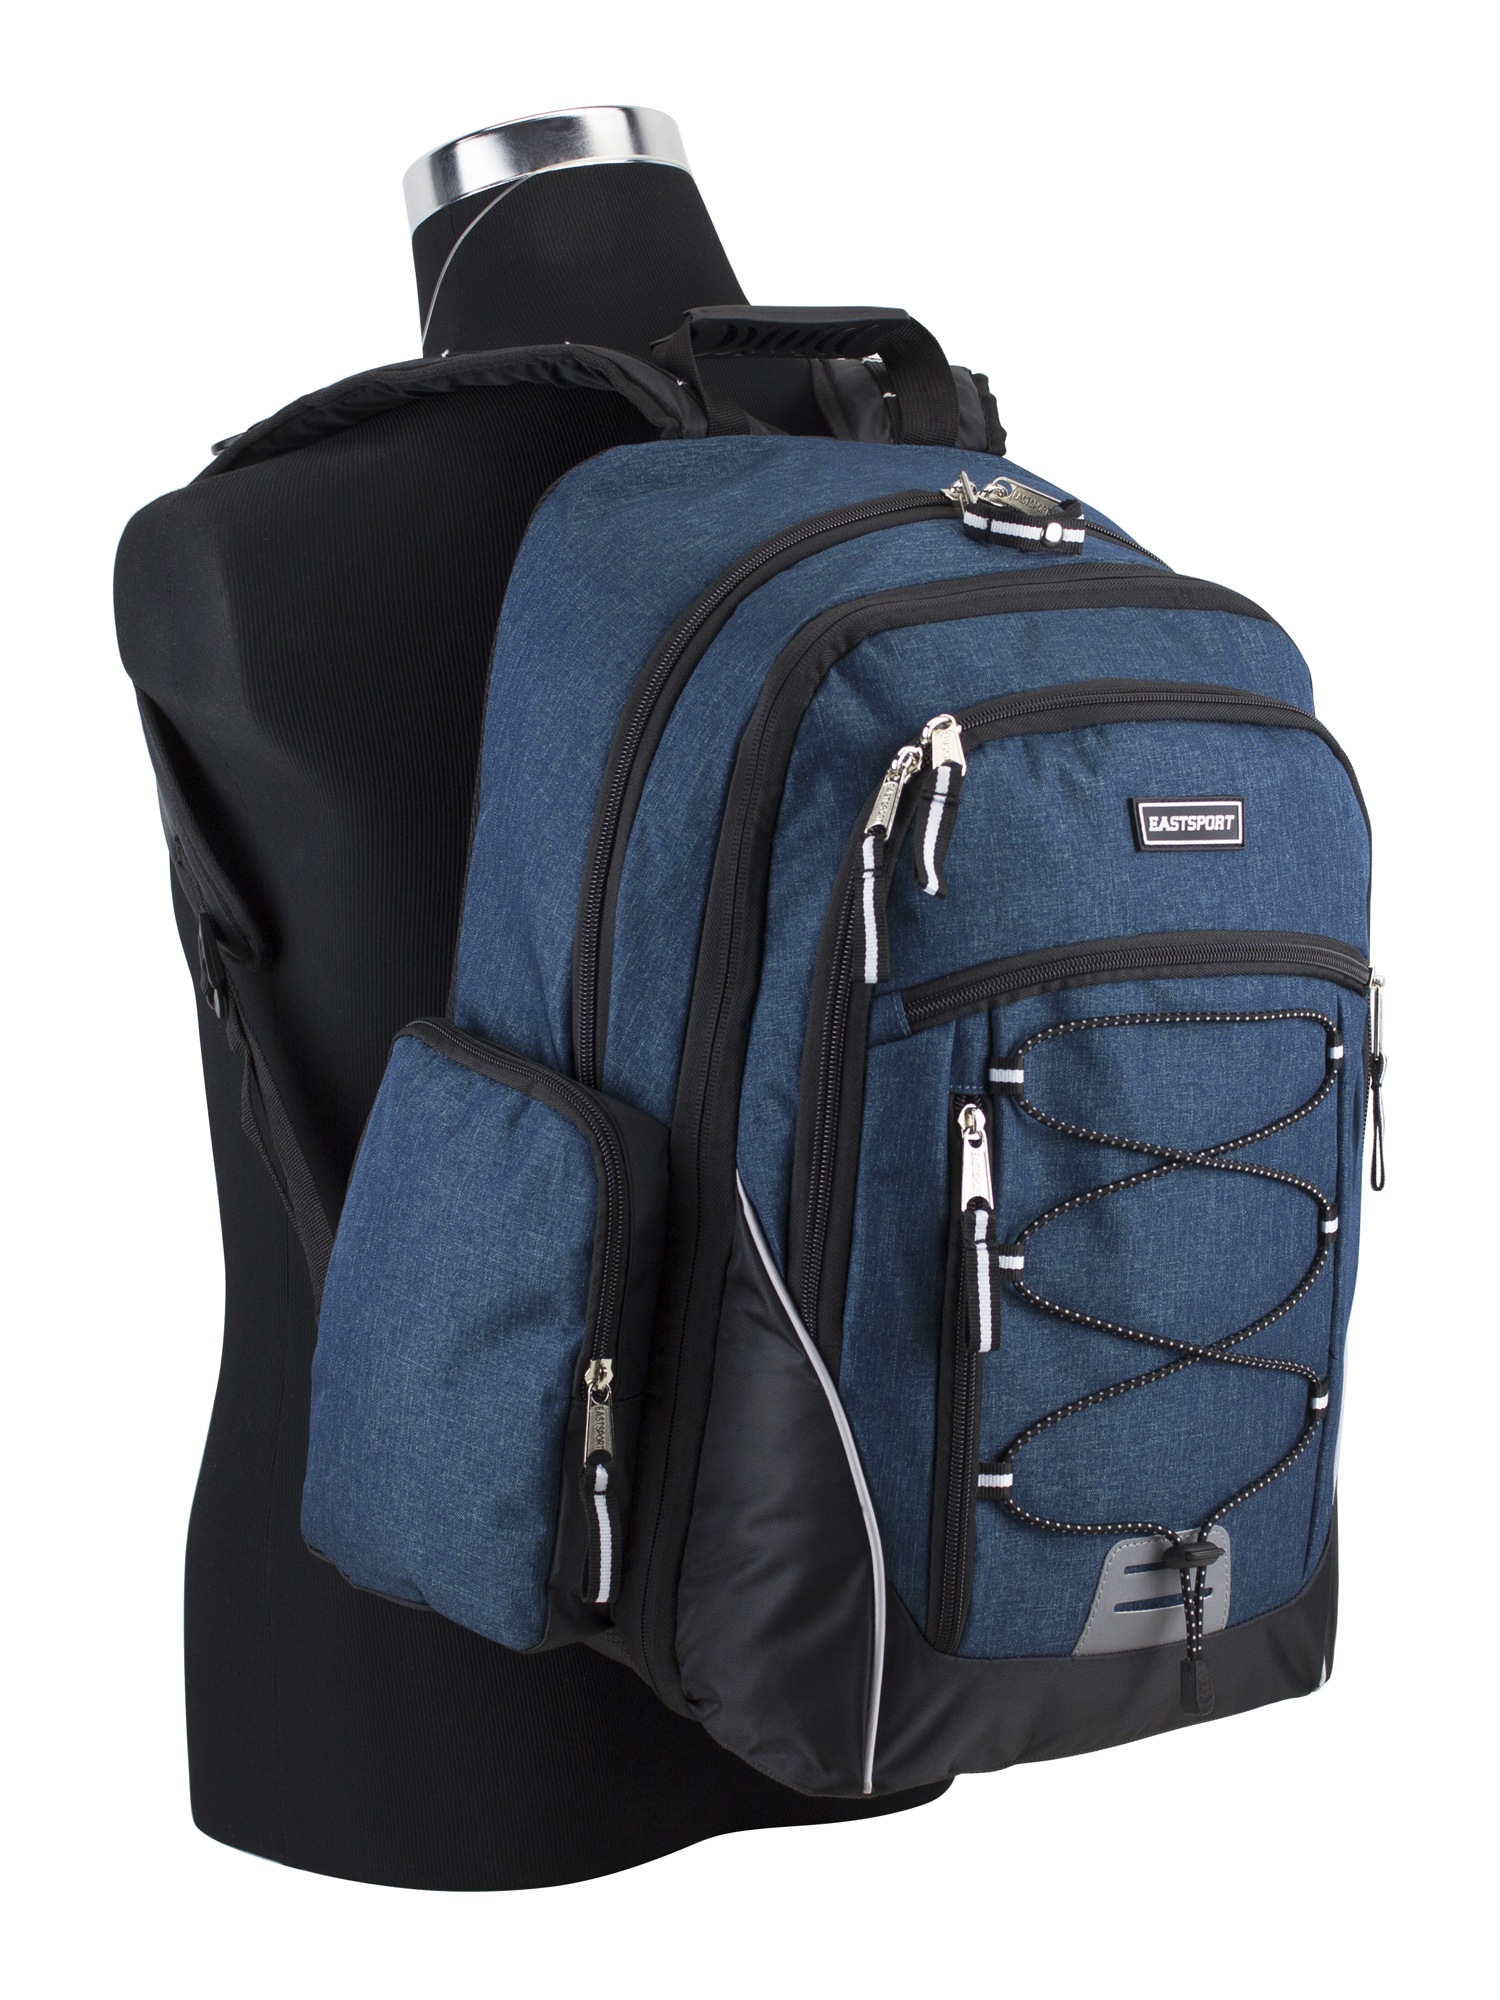 Eastsport Optimus Backpack, Navy - image 3 of 8